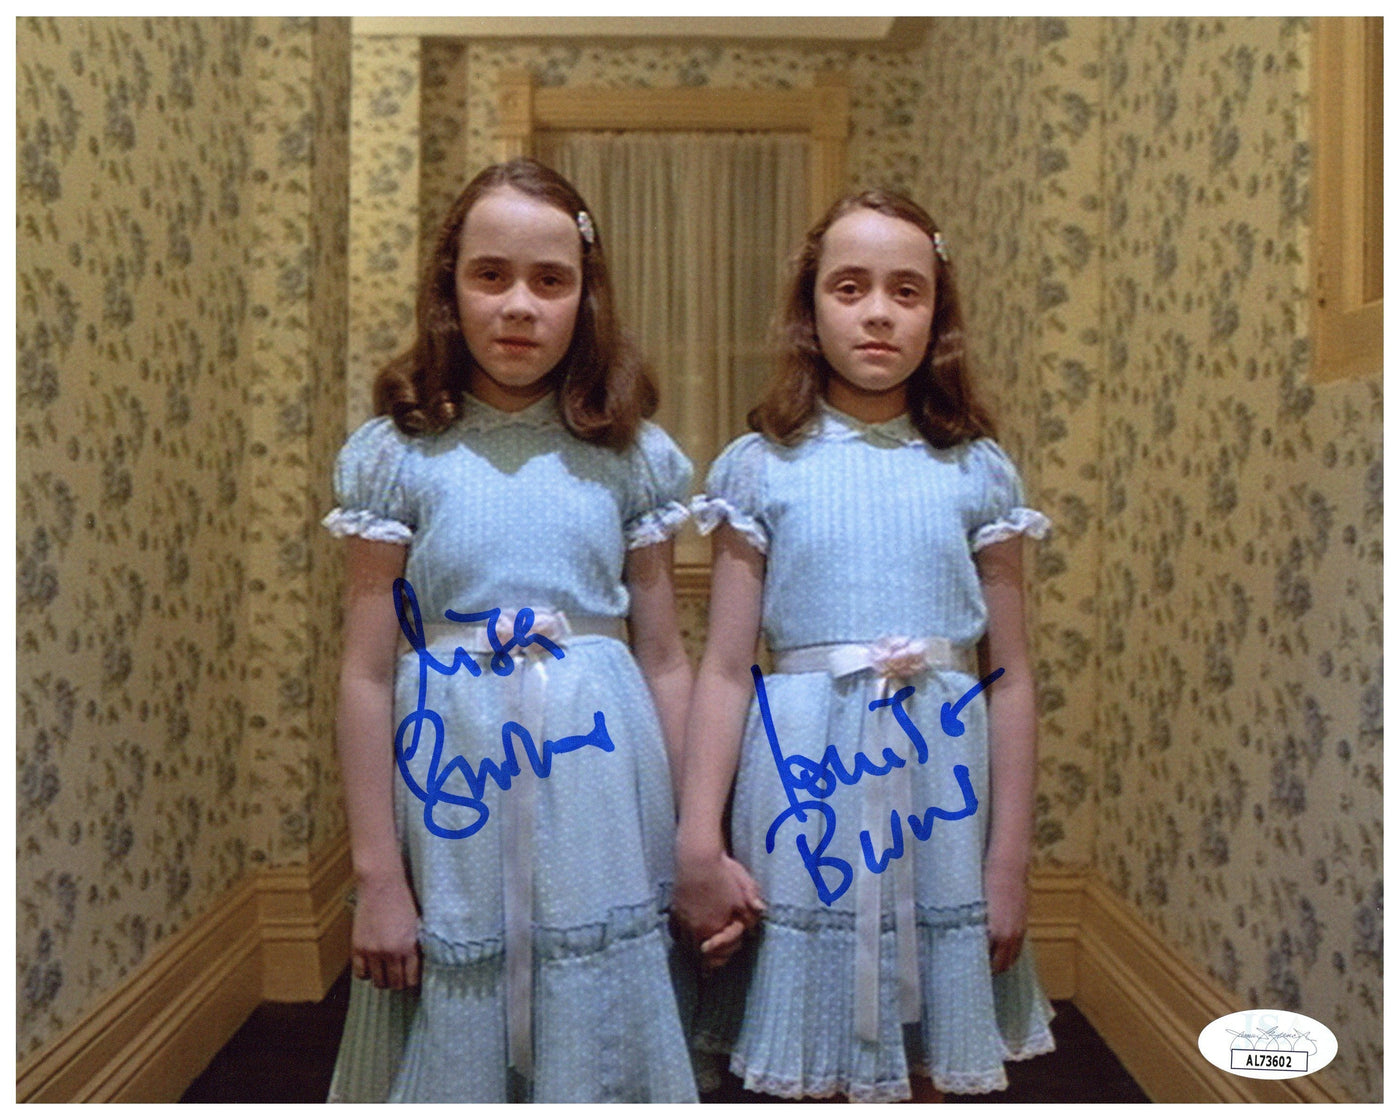 Lisa and Louise Burns Signed 8X10 Photo The Shining Autographed Grady Twins JSA COA 2